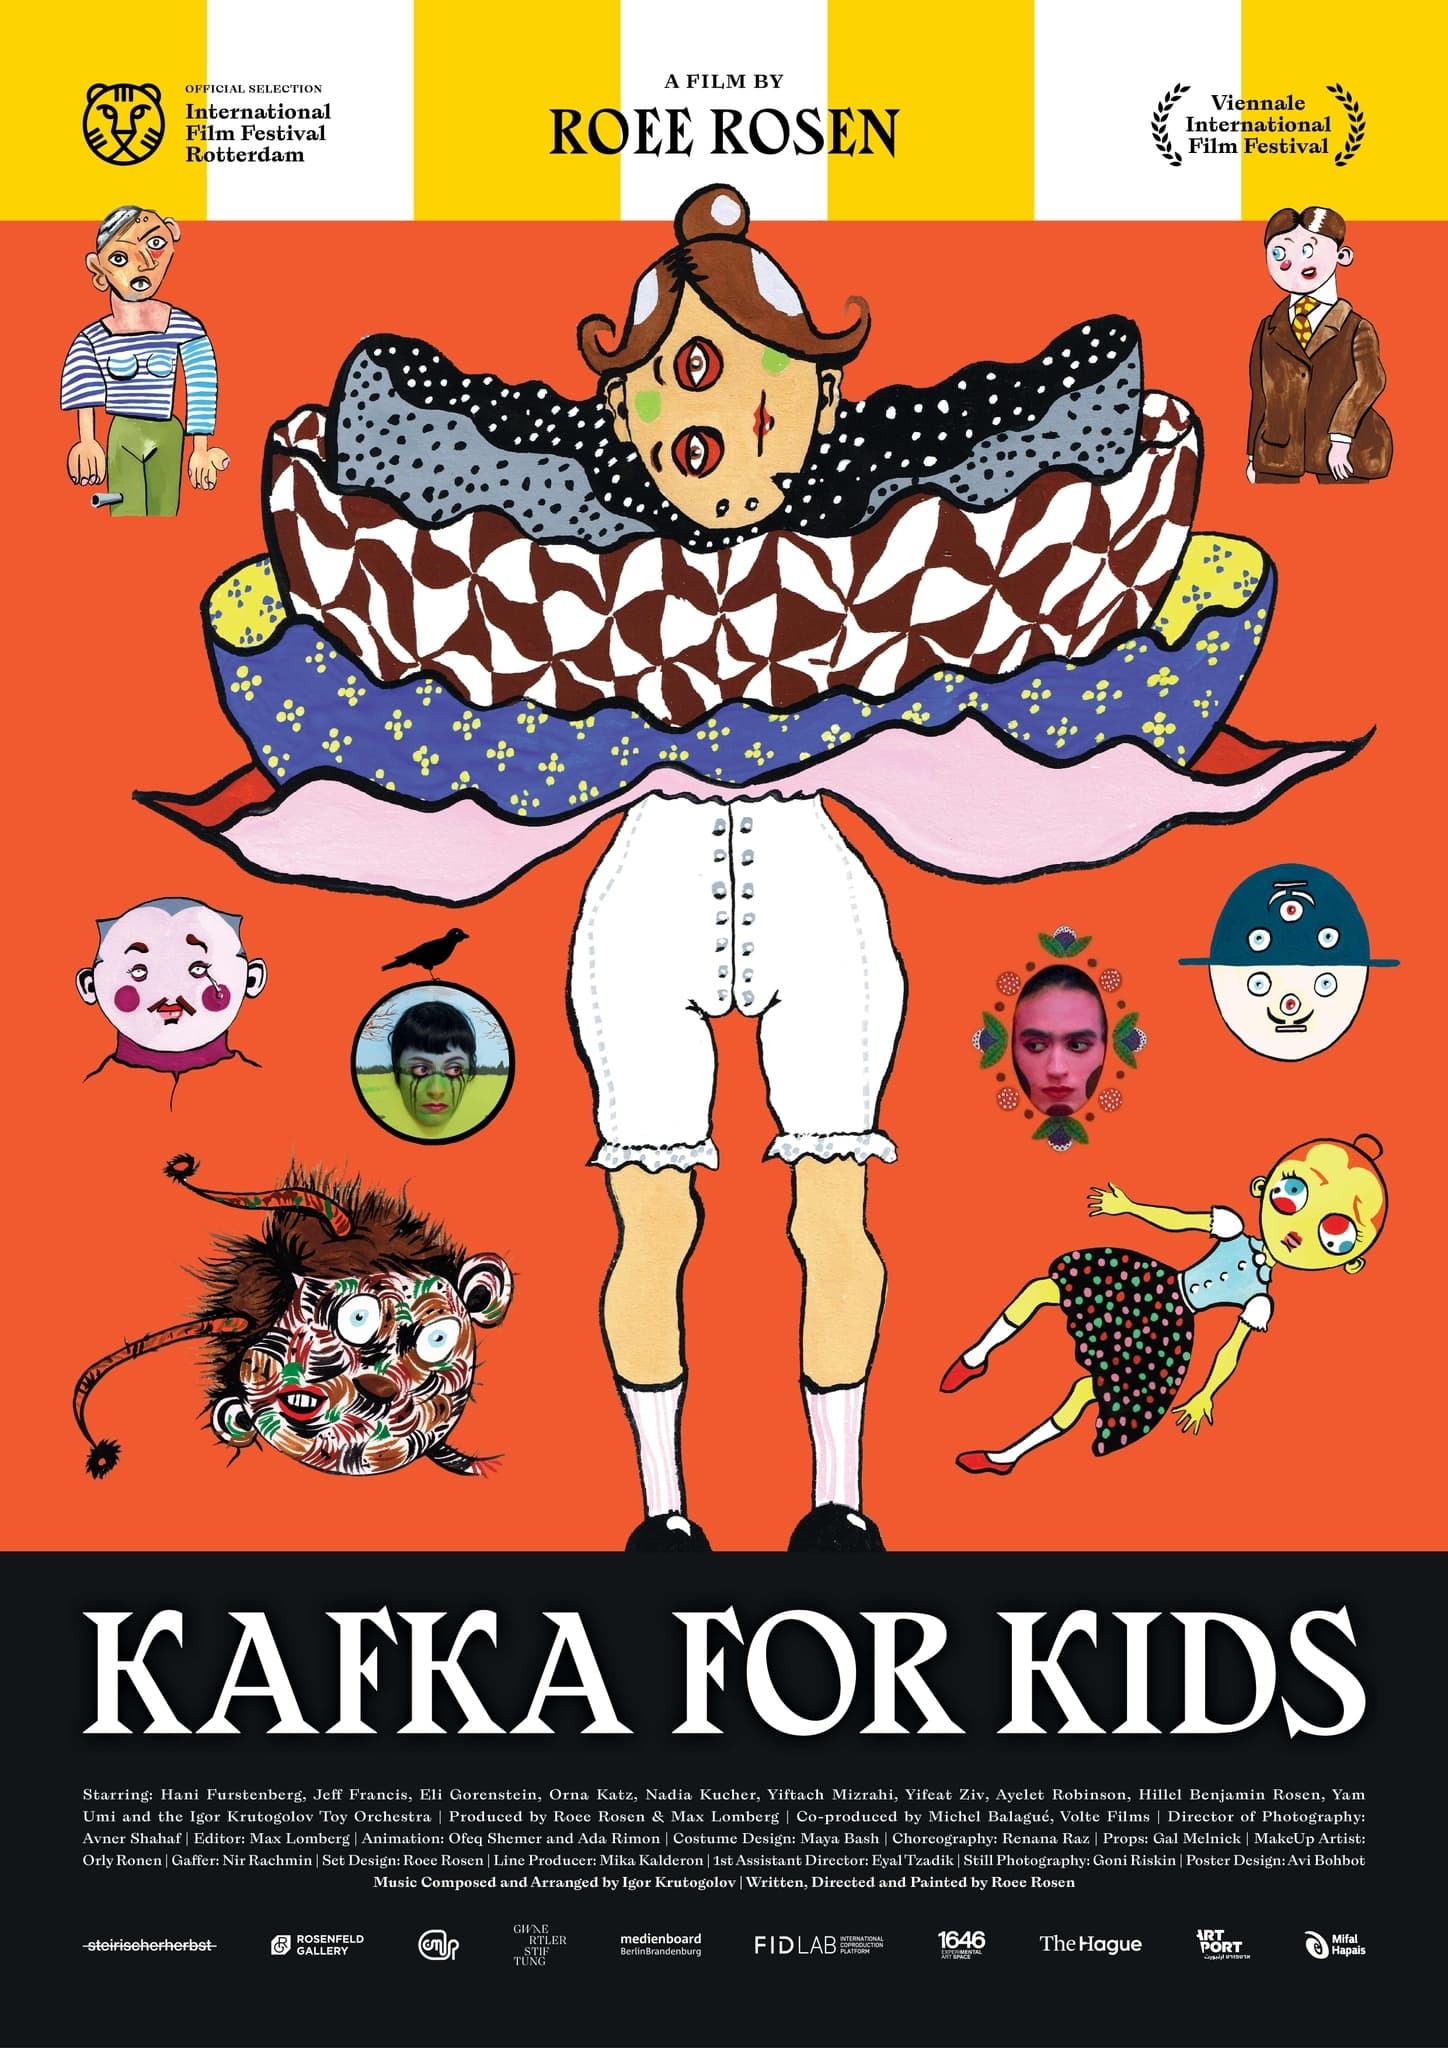 Kafka for Kids